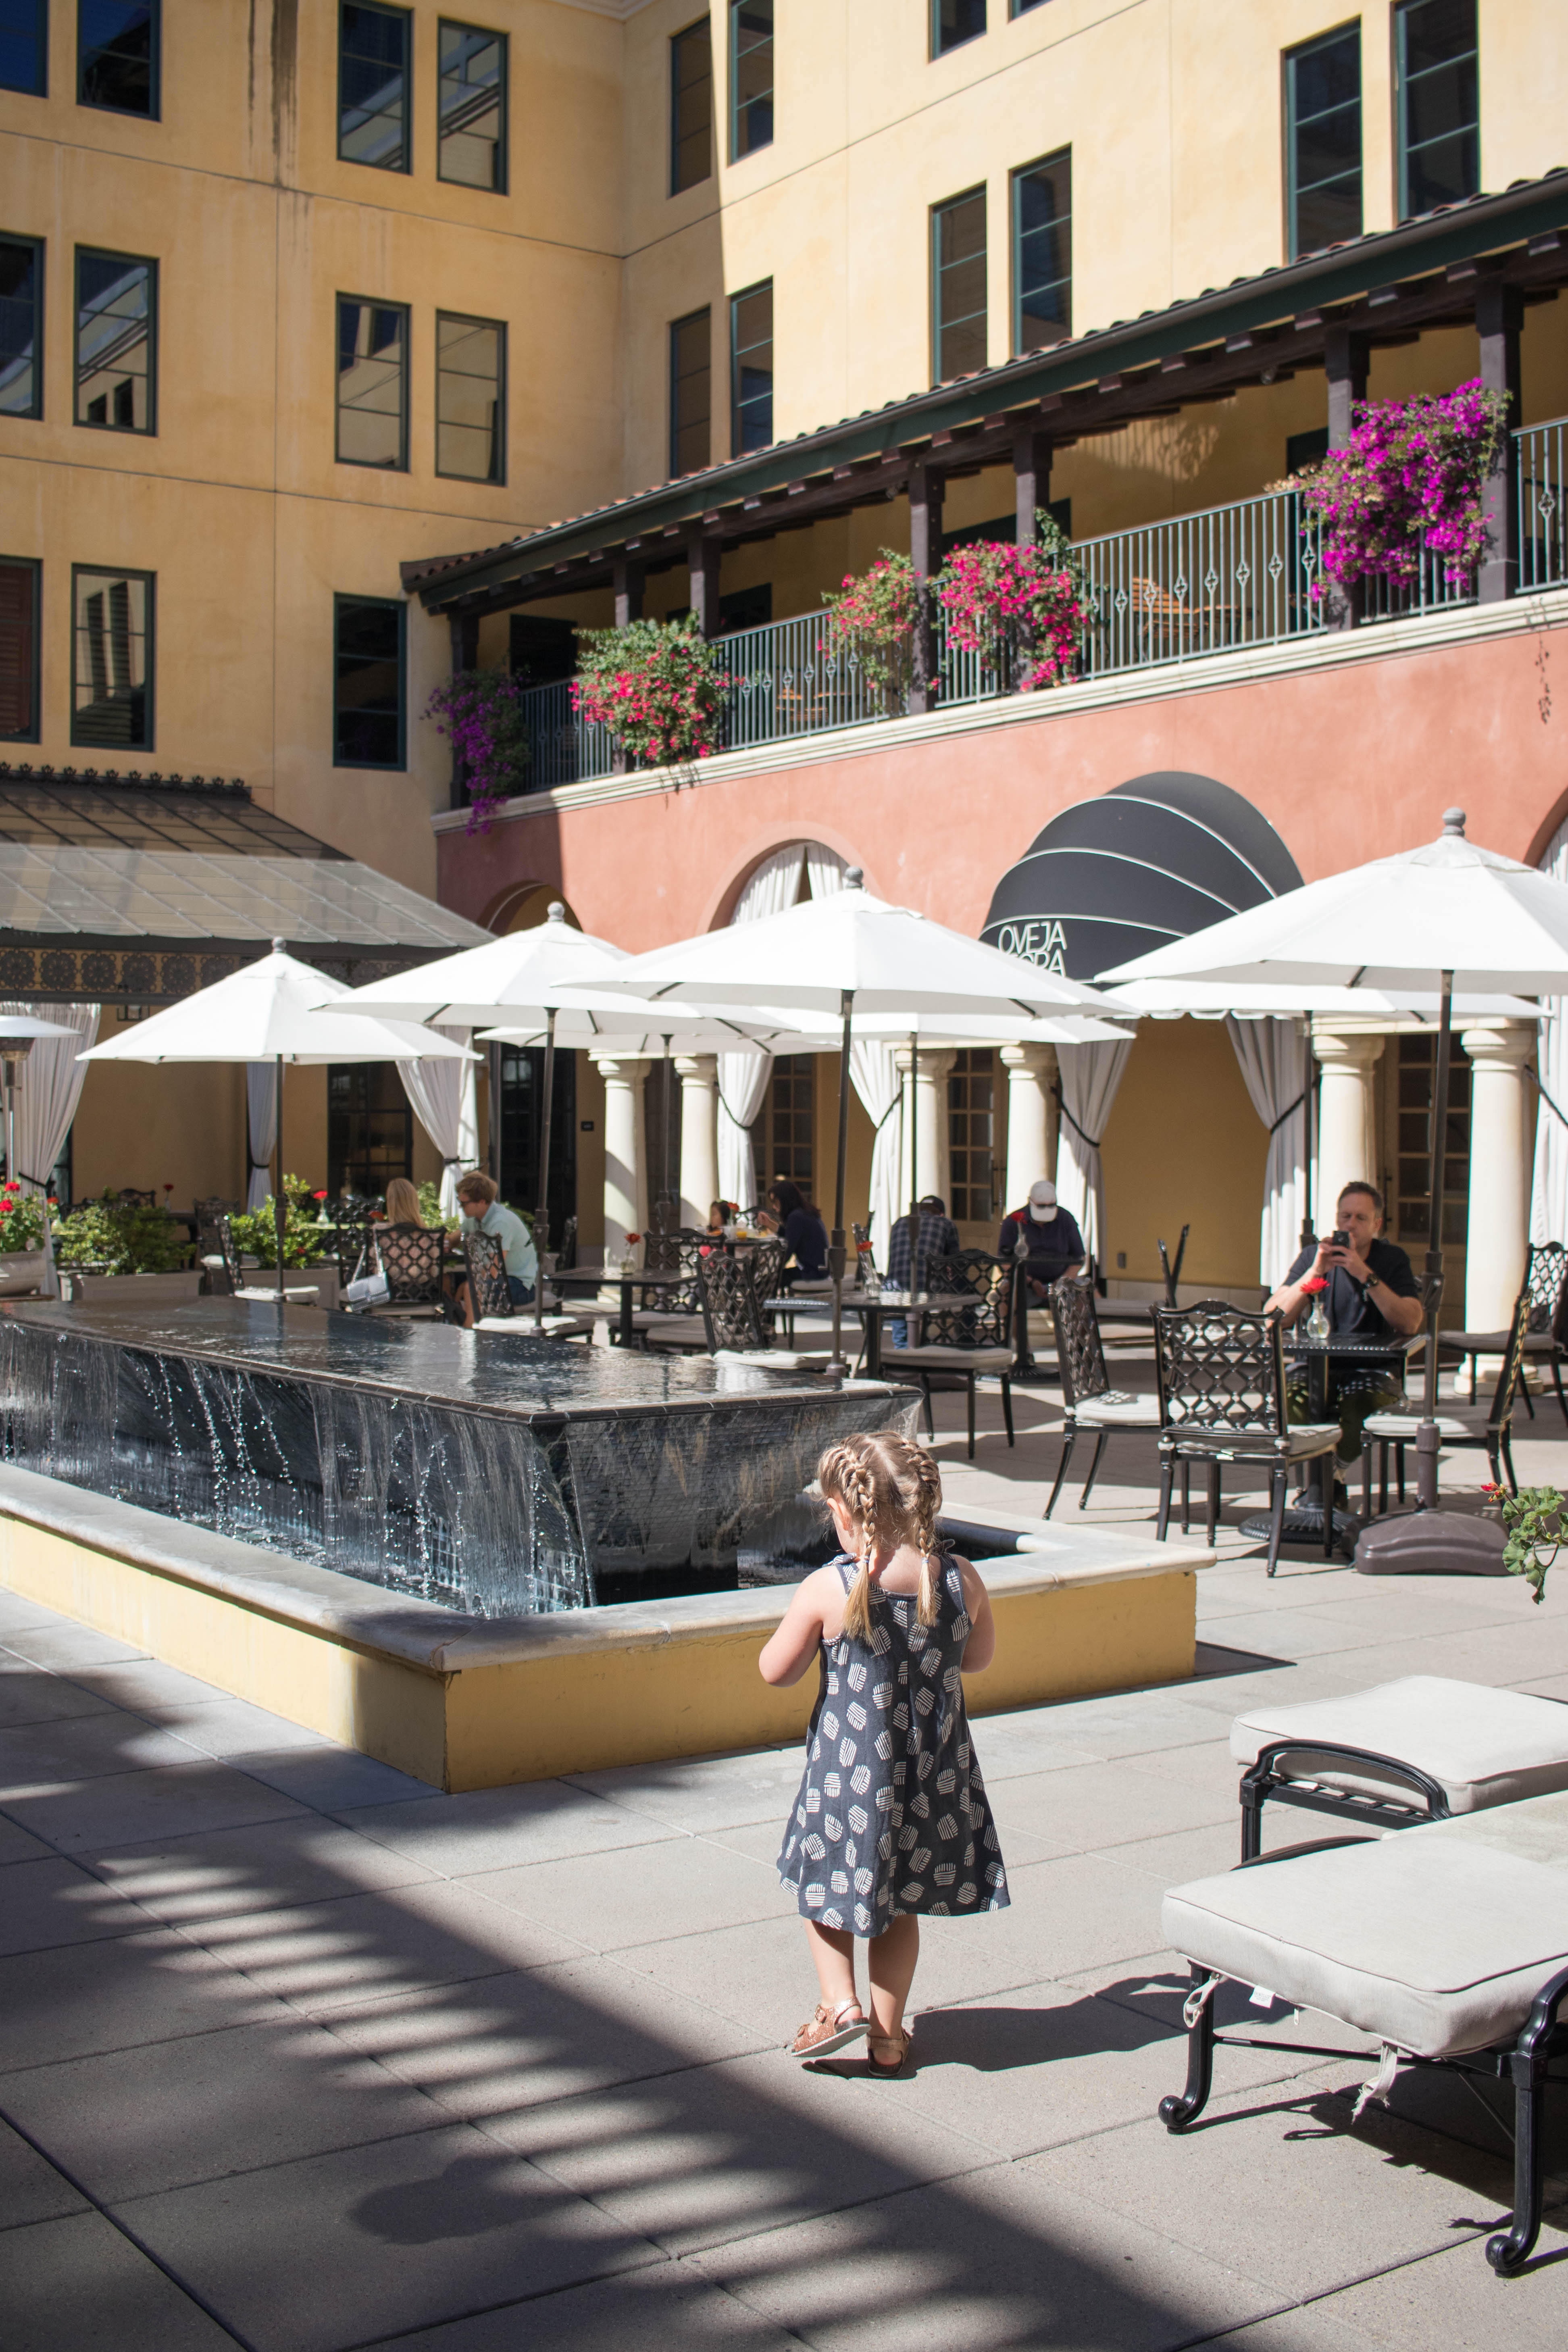 where to stay in San Jose california #sanjose #hotelvalencia #santanarow